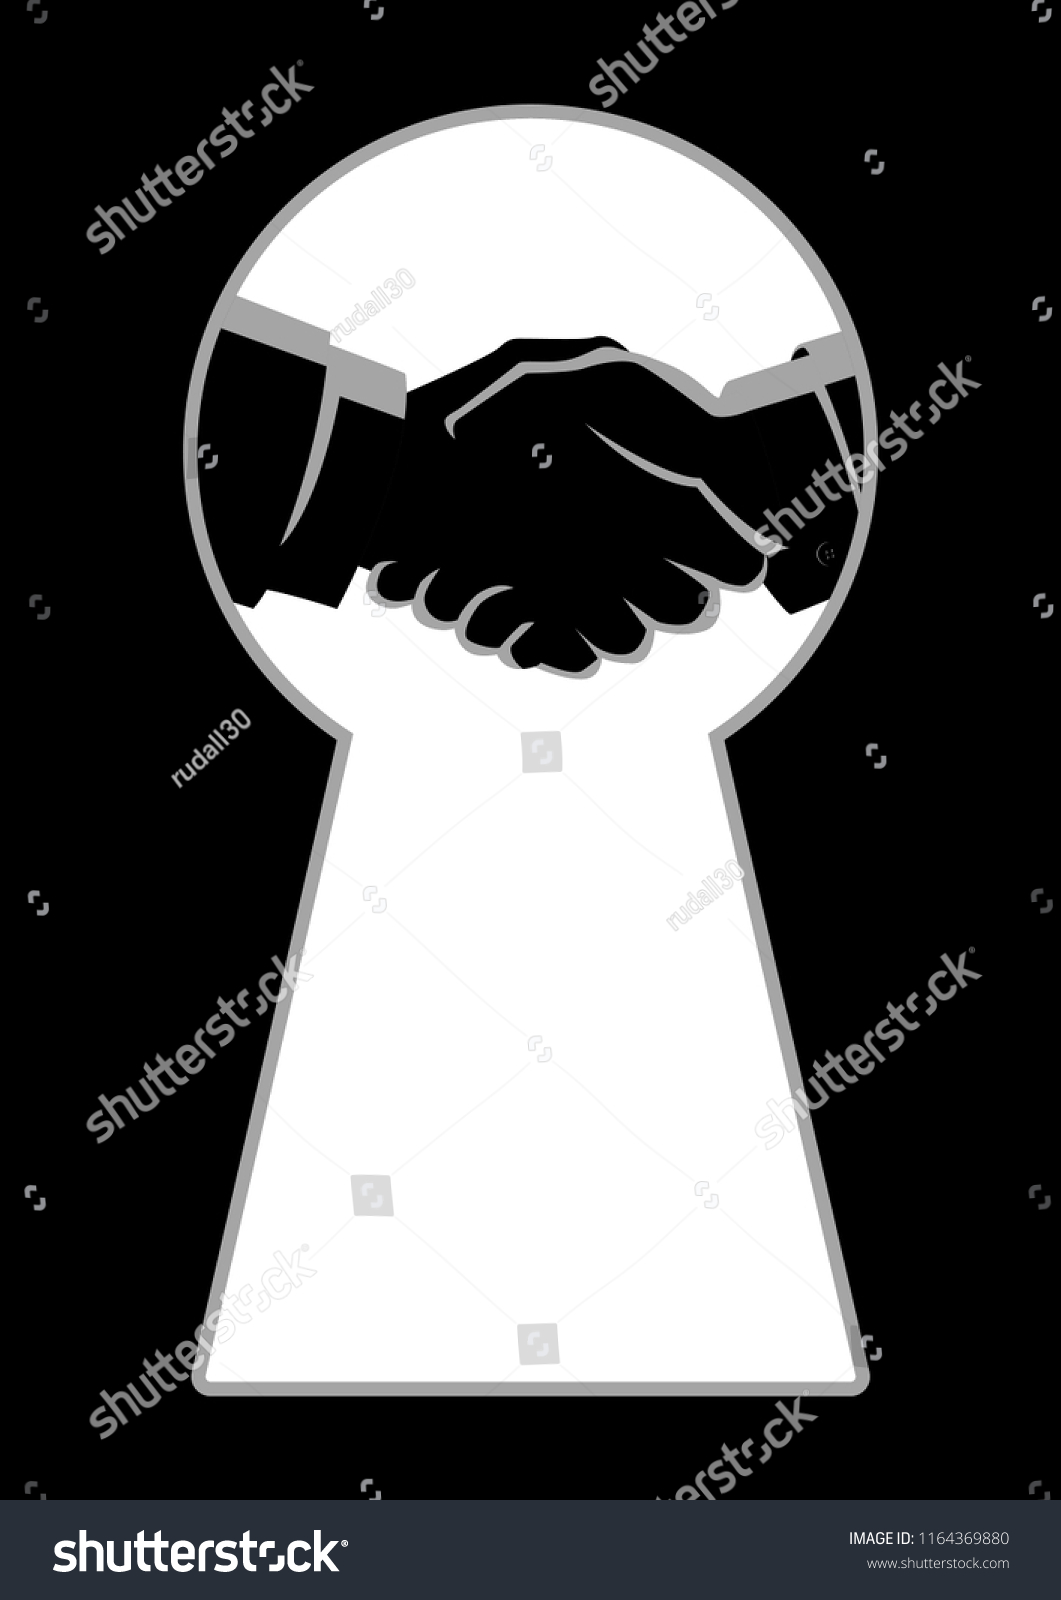 SVG of Business concept illustration of two businessmen shaking hands seen through a keyhole, business idiom for backroom deal svg